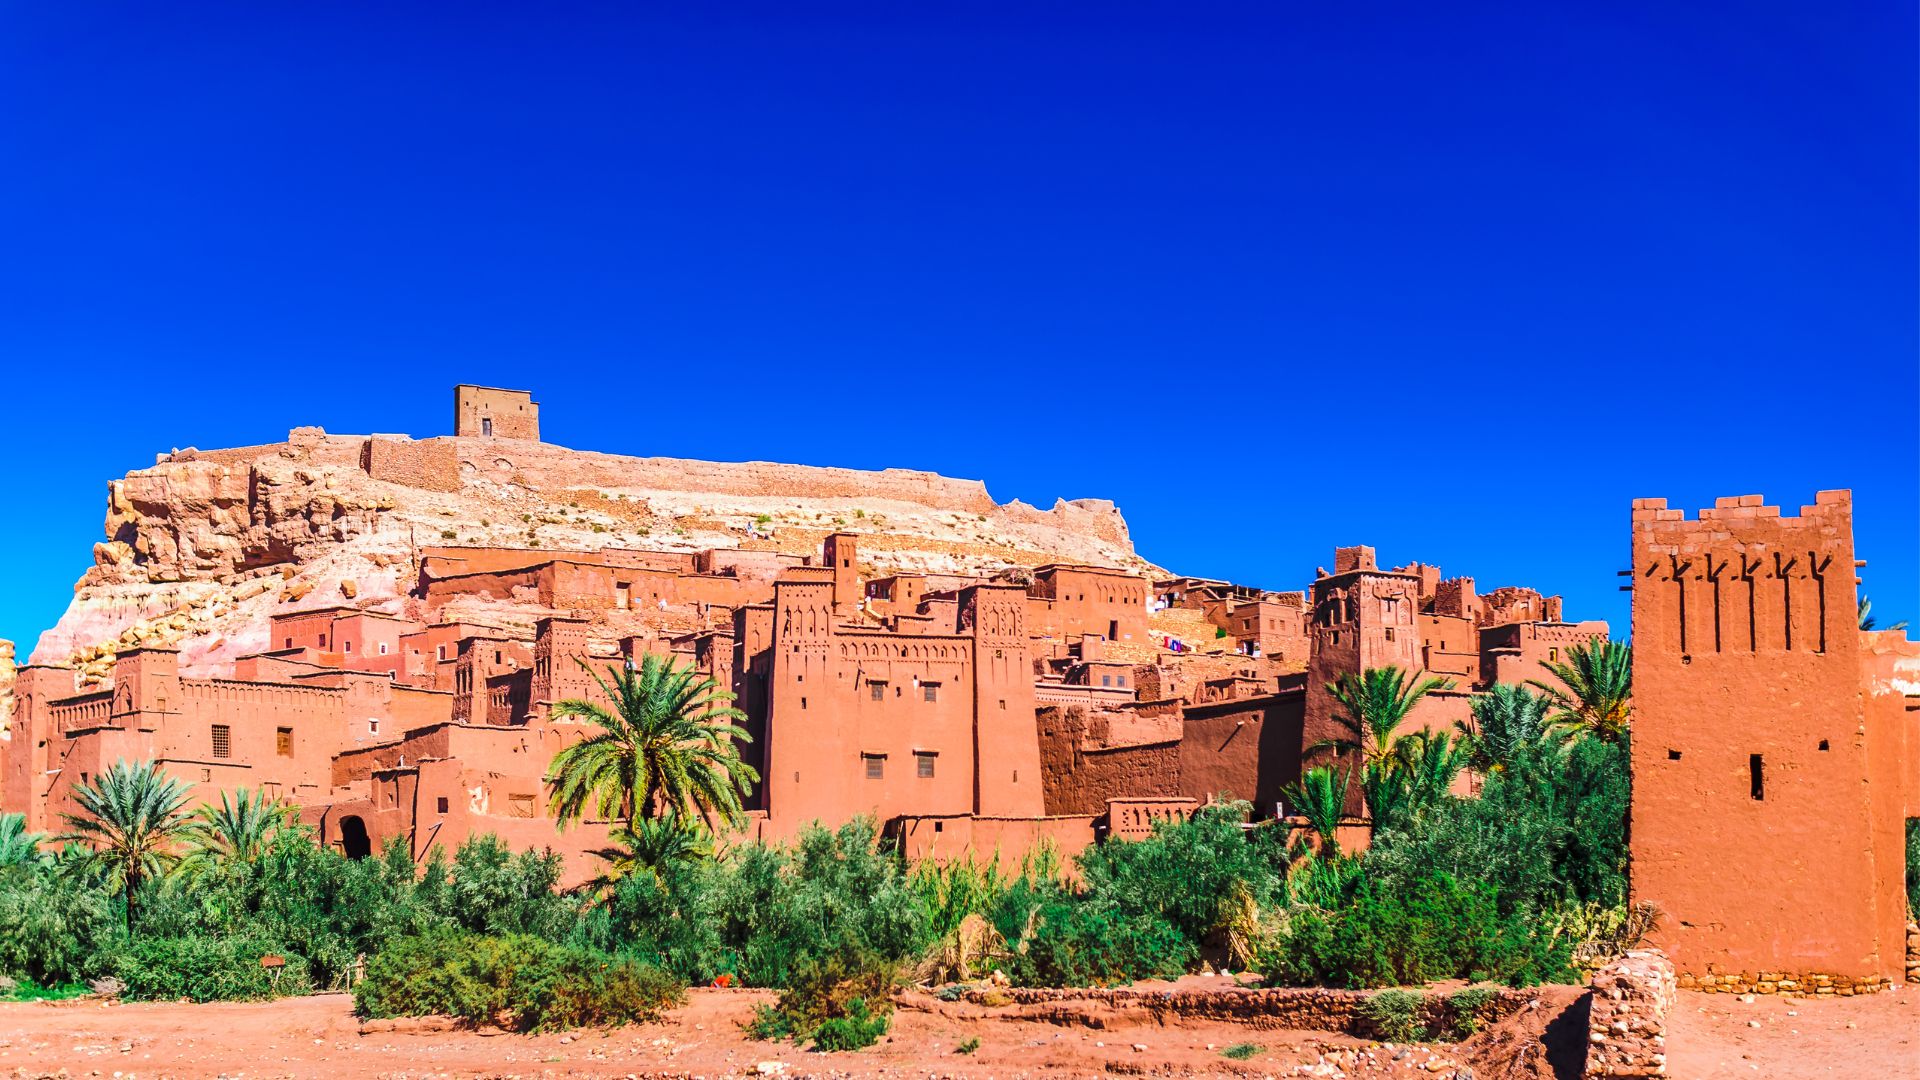 Excursion to Ouarzazate and Kasbah Ait Ben Haddou